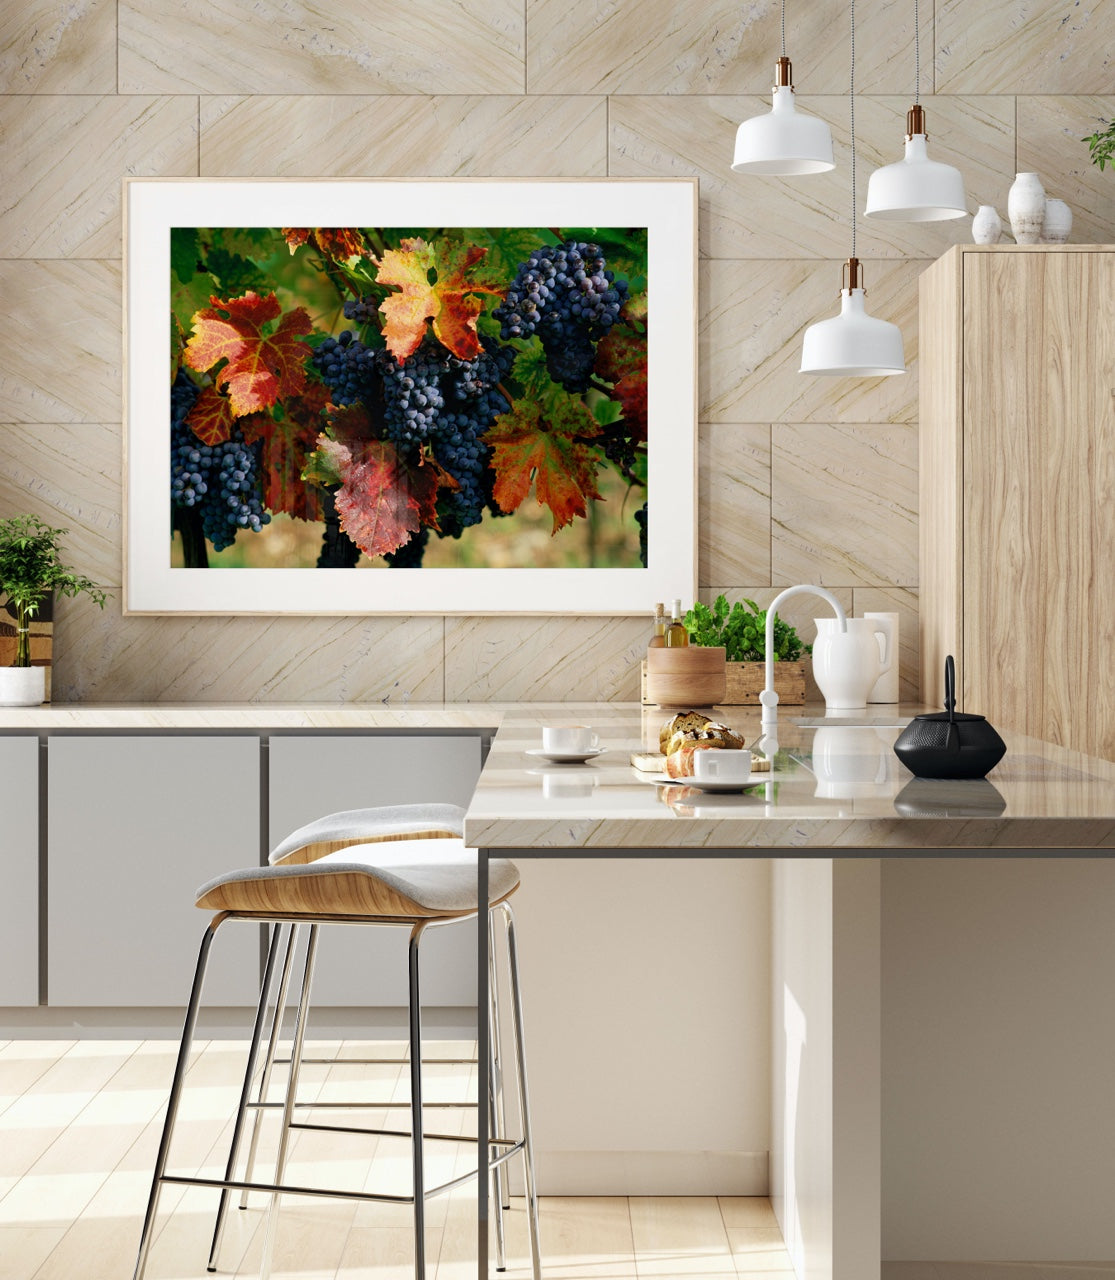 Framed print of vineyard in a modern kitchen